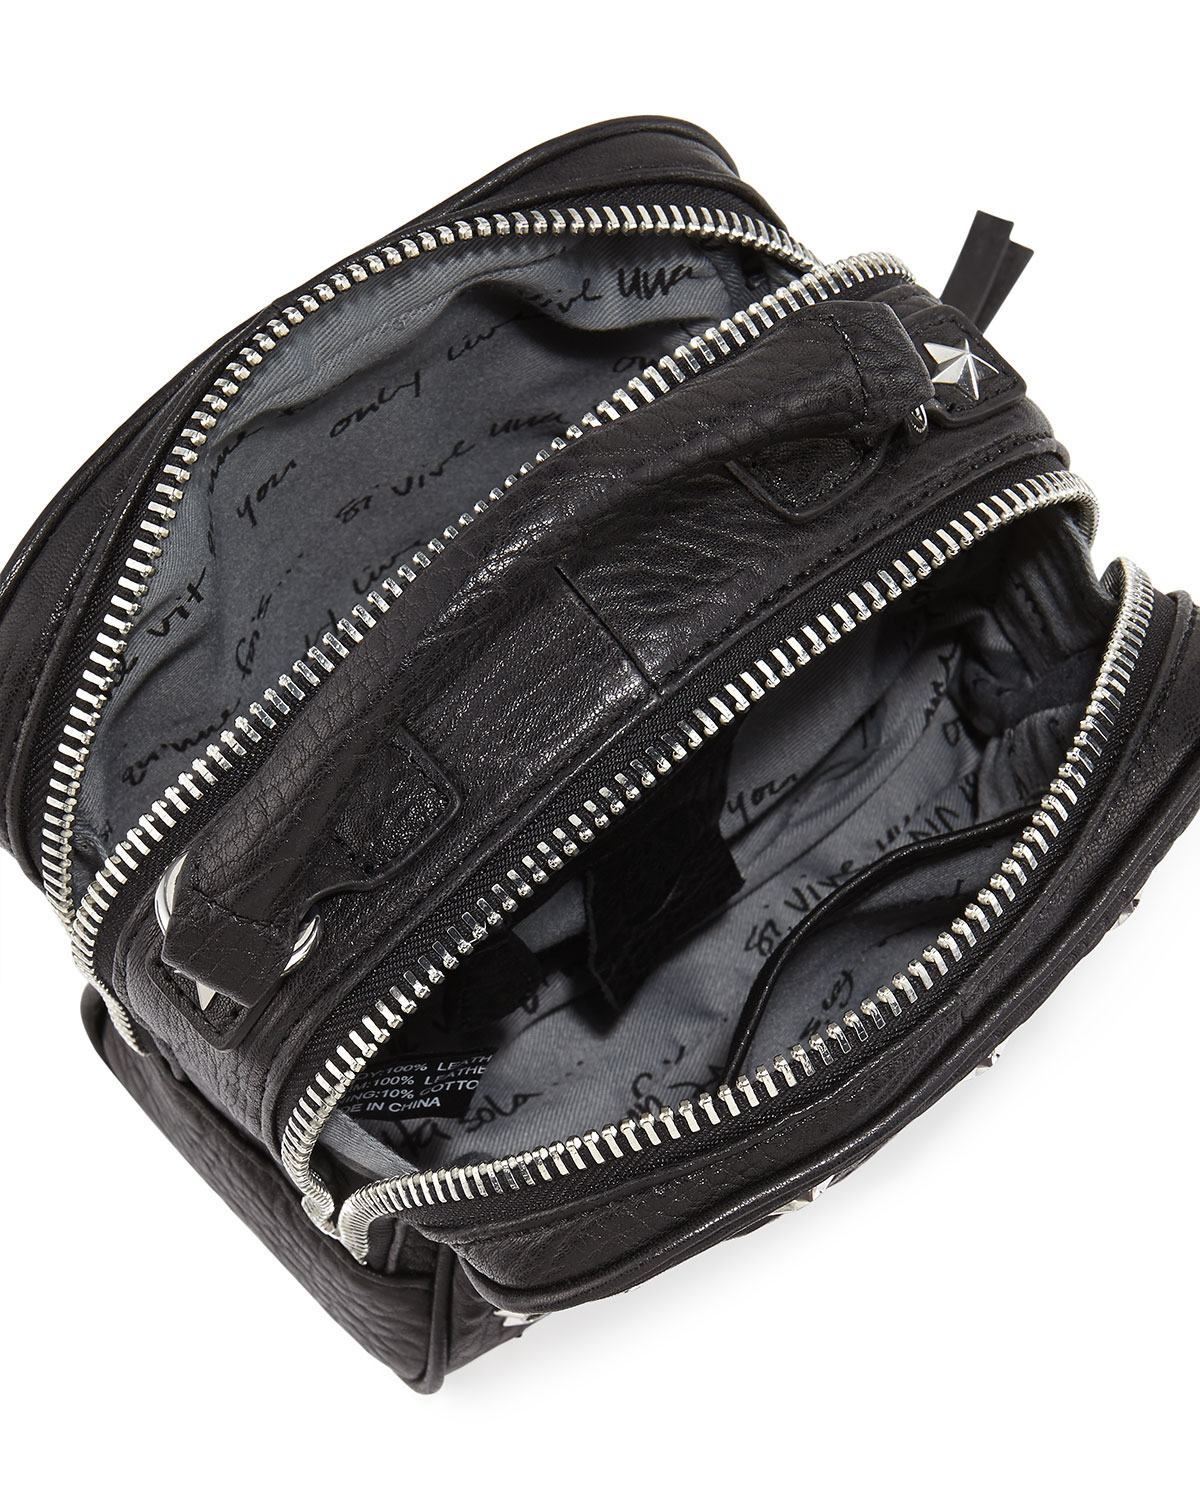 Ash Star-Studded Frankie Leather Crossbody Bag in Ash (Black) - Lyst